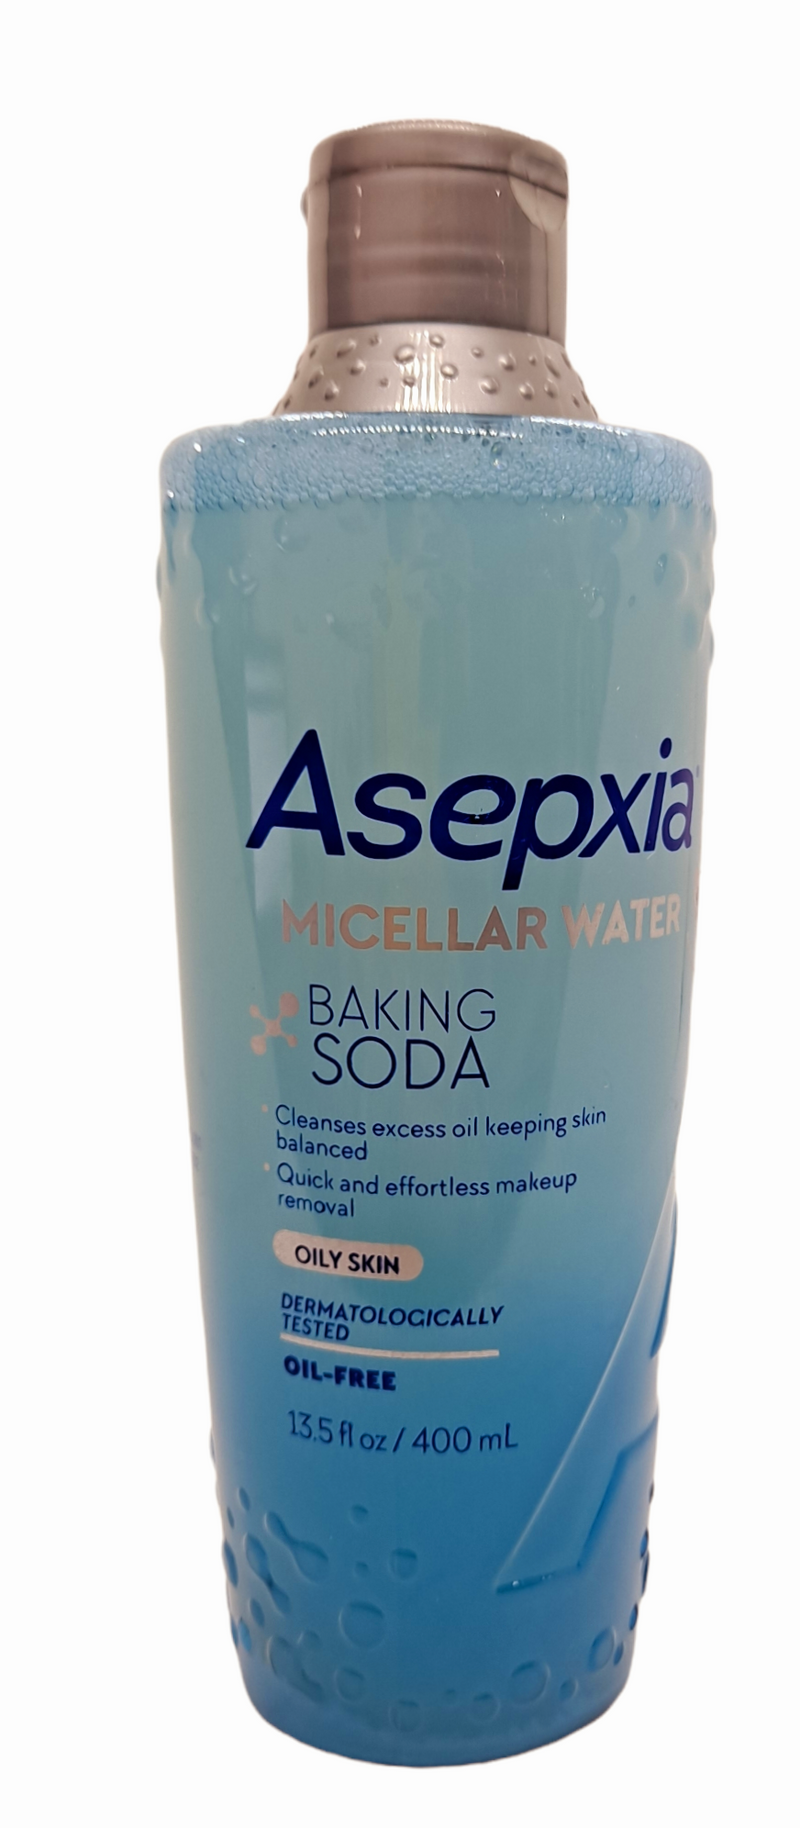 Asepxia Micellar Water Bakin Soda / 13.5 floz